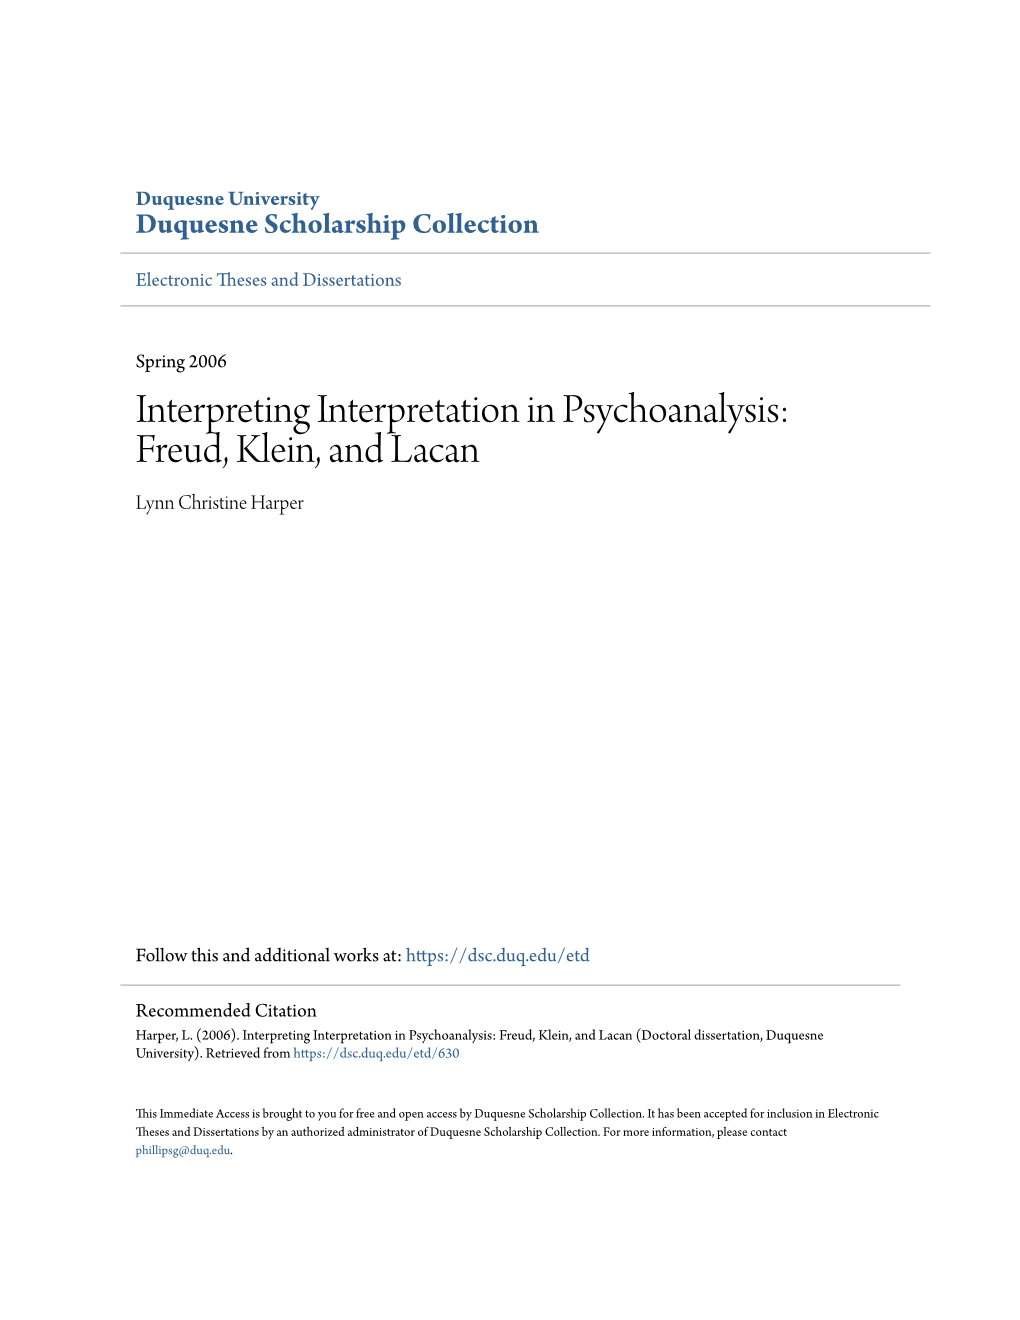 Interpreting Interpretation in Psychoanalysis: Freud, Klein, and Lacan Lynn Christine Harper